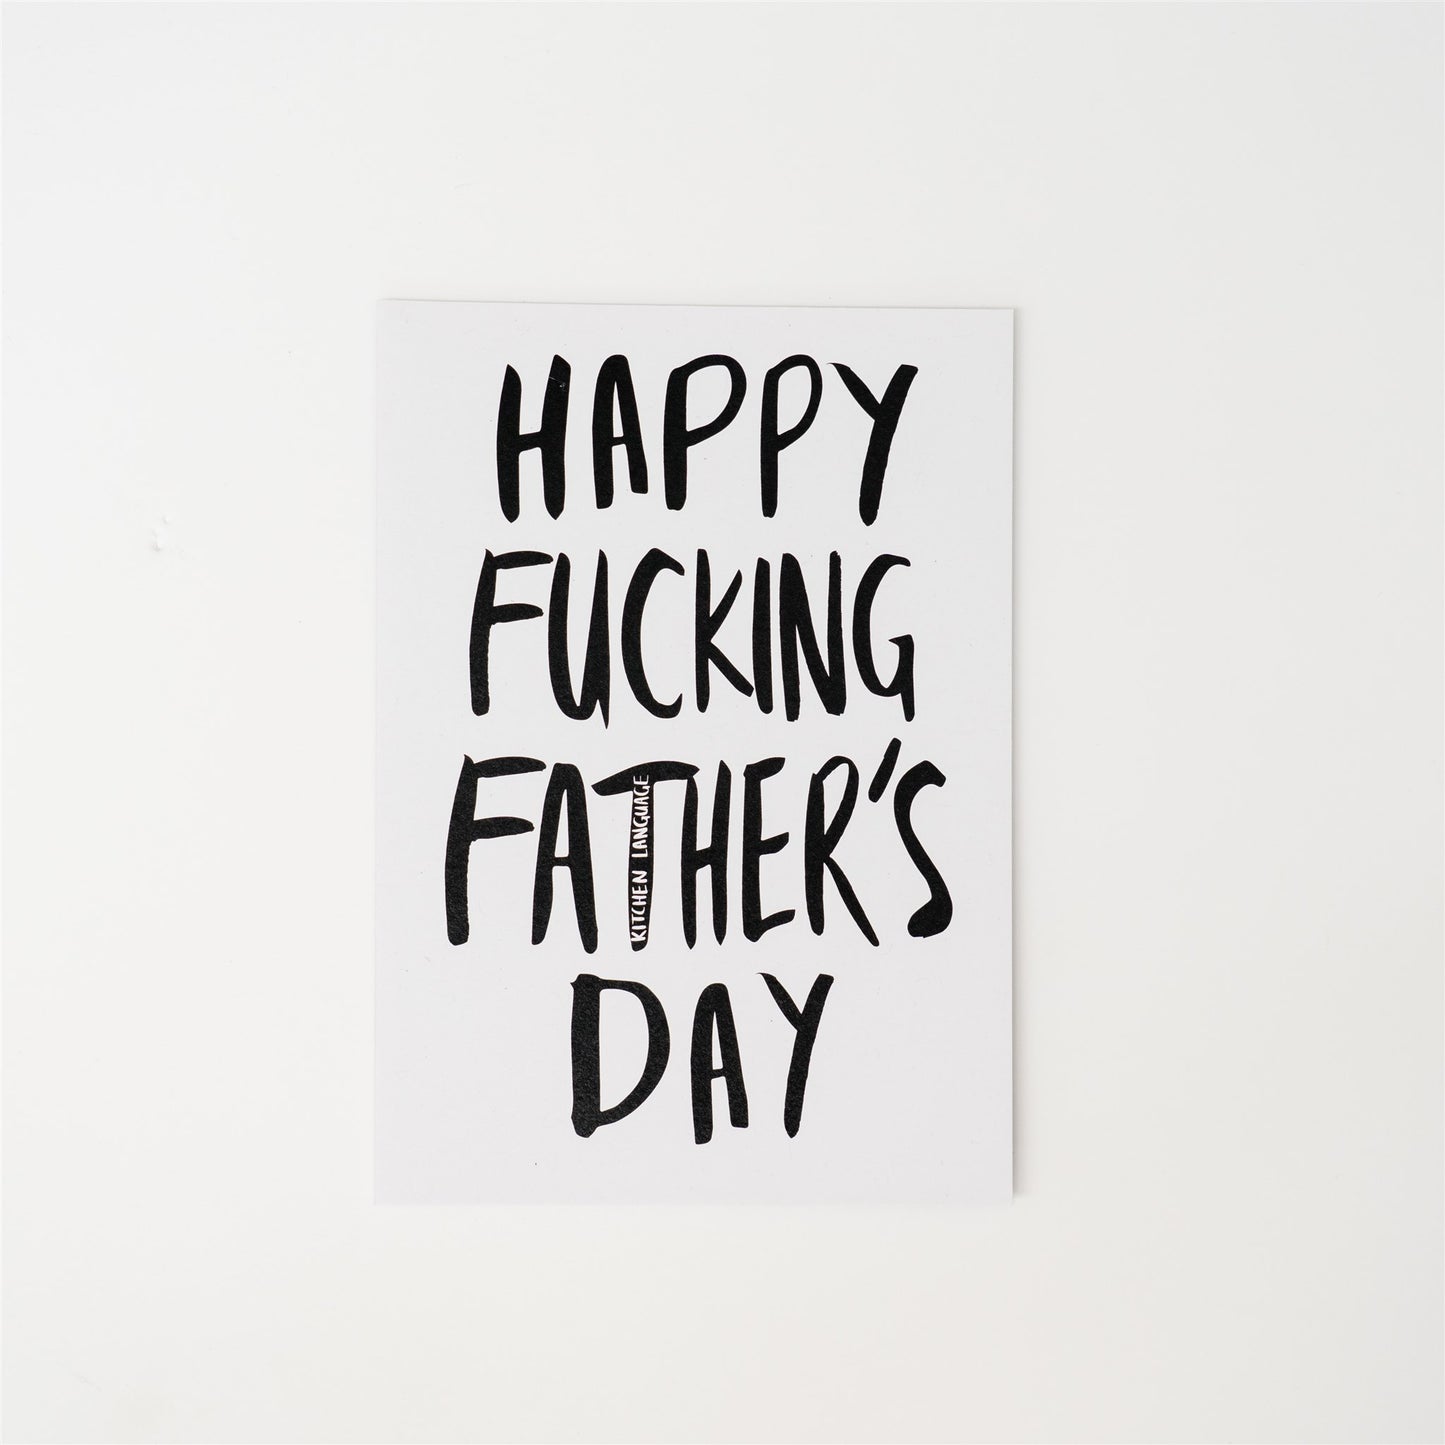 Happy Fucking Fathers Day- greeting card- kitchen language